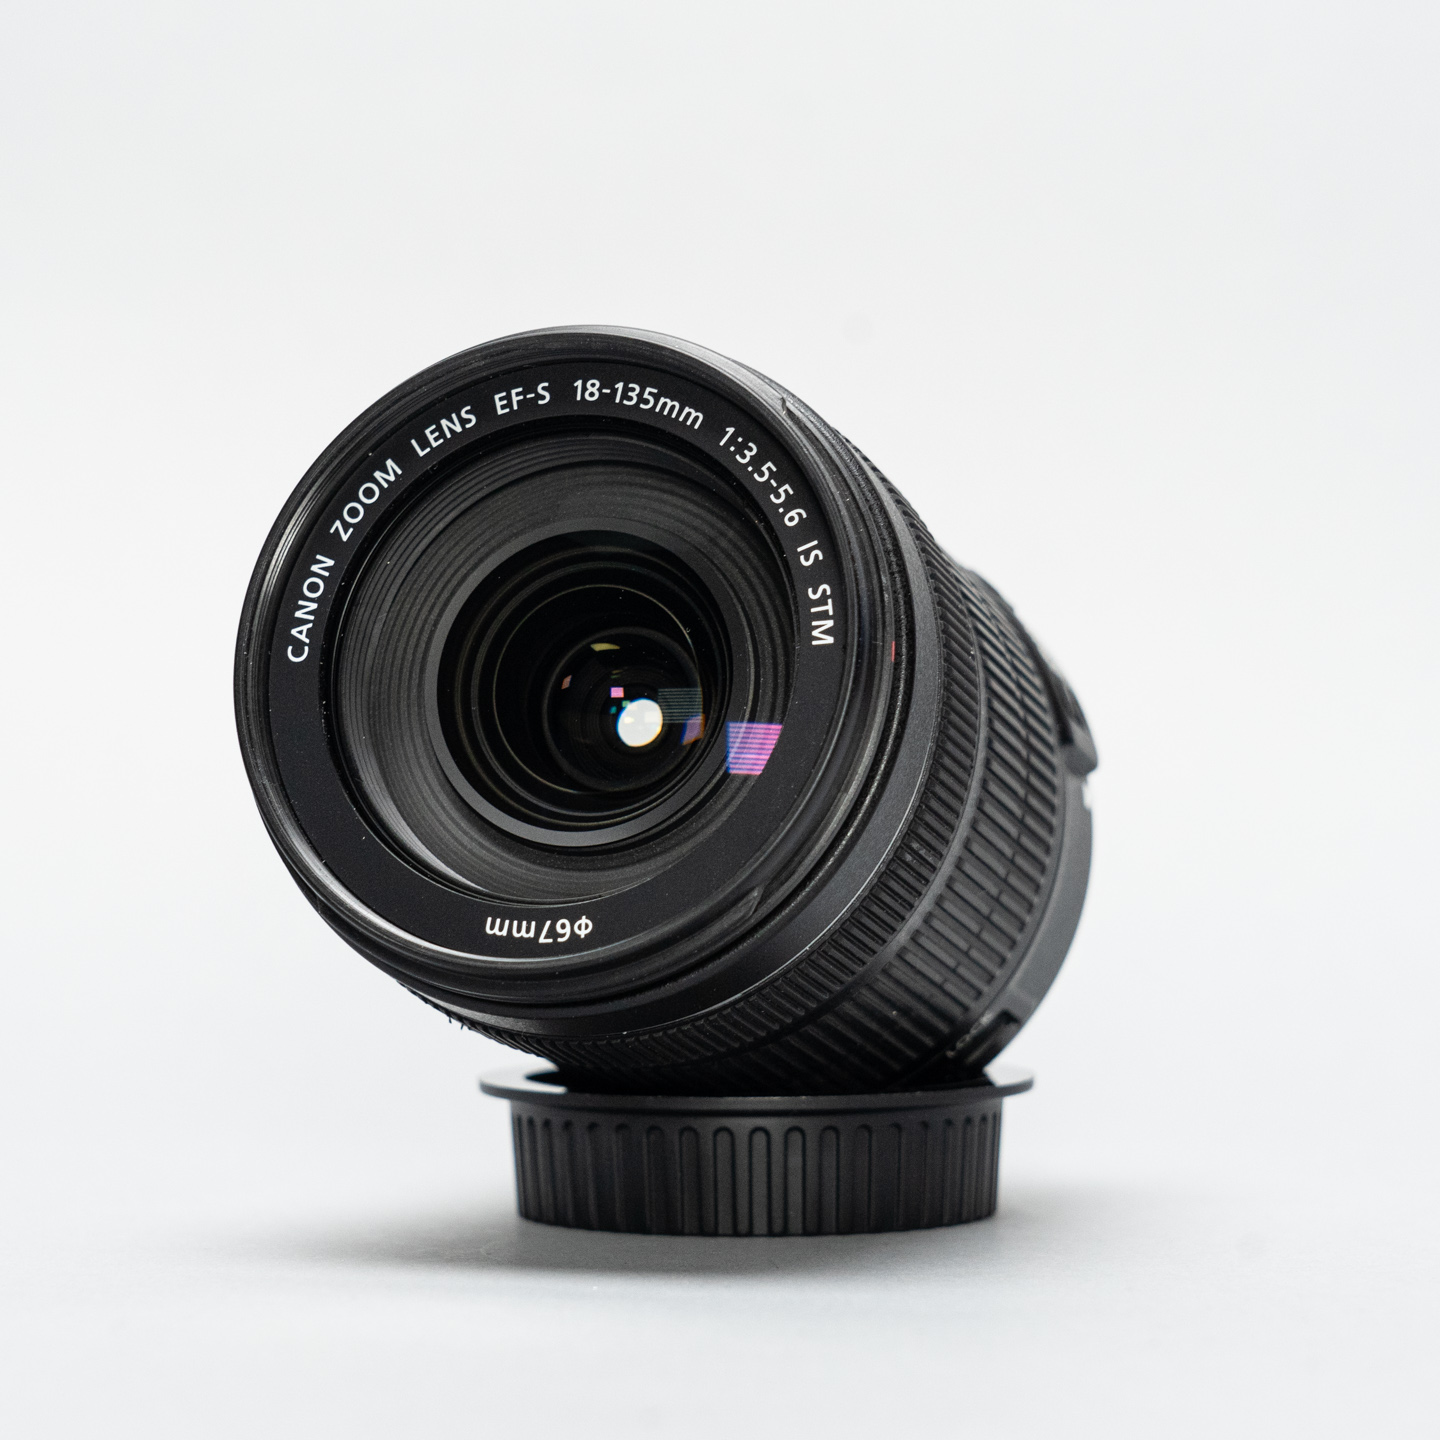 Canon EF-S 18-135mm f/3.5-5.6 IS STM - カメラ - www.dellabianca.it